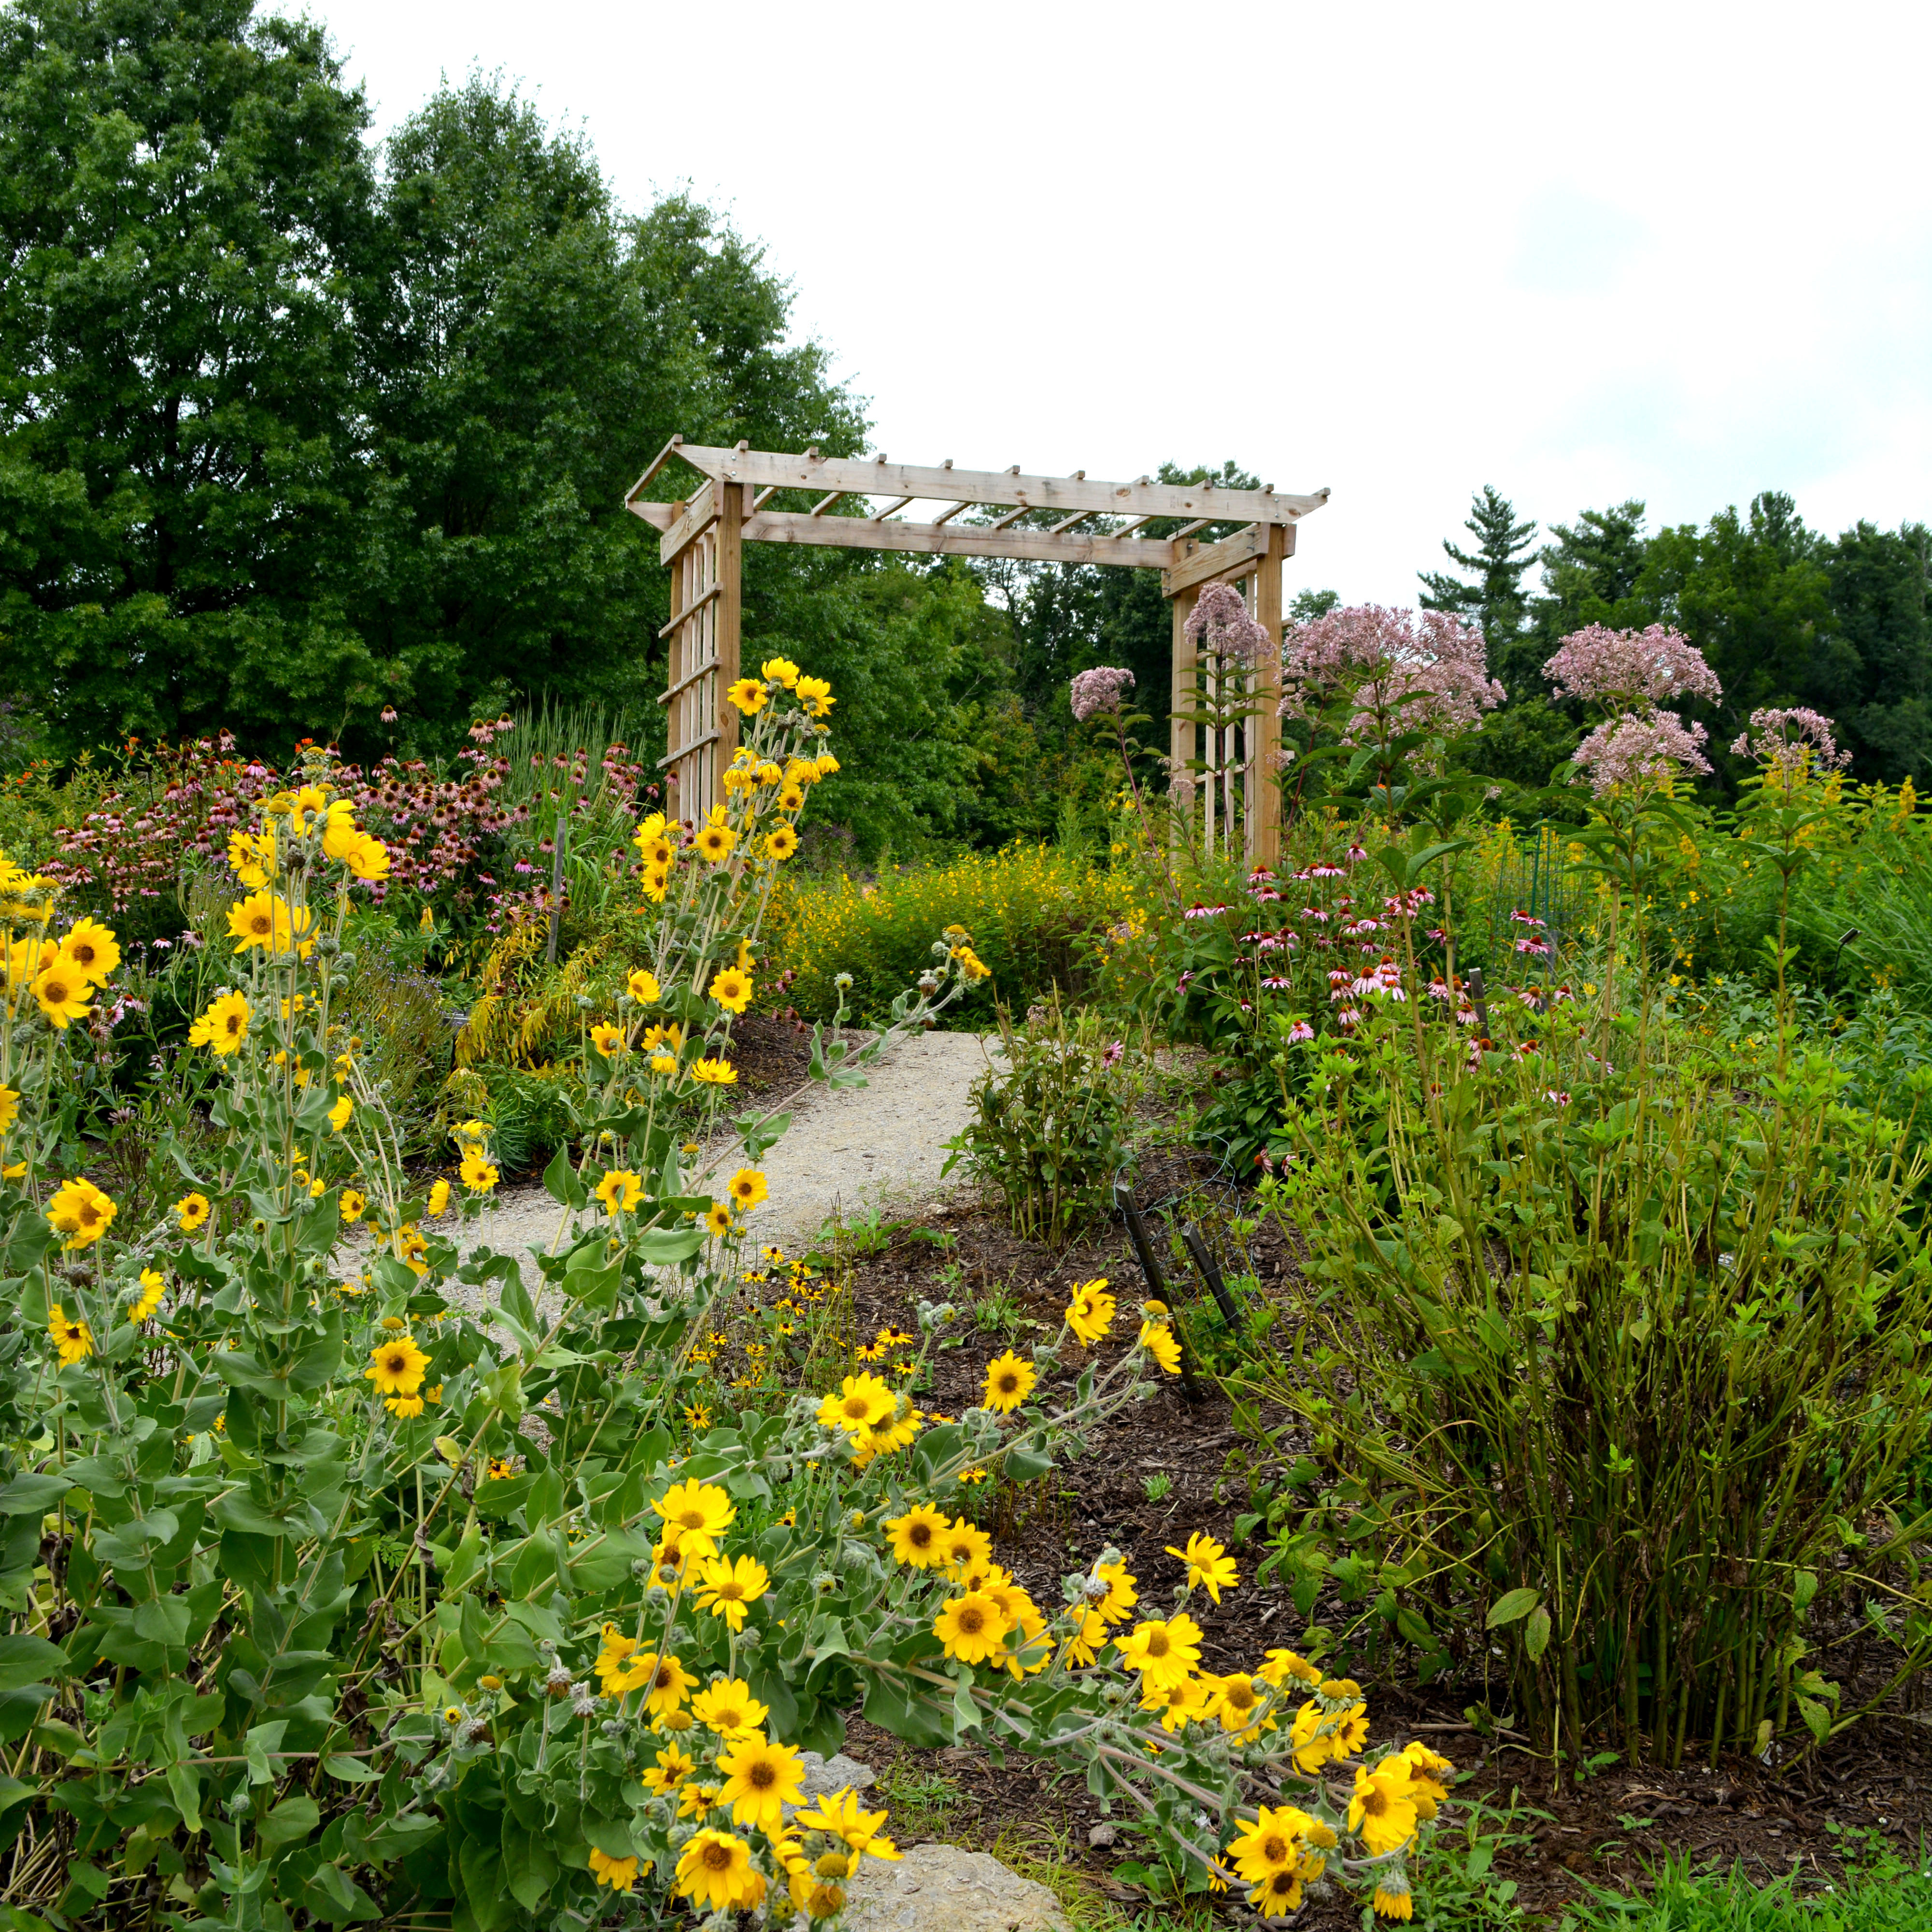 Colorful native flowers surround the Cincinnati Nature Center pollinator garden trail, leading to center trellis.